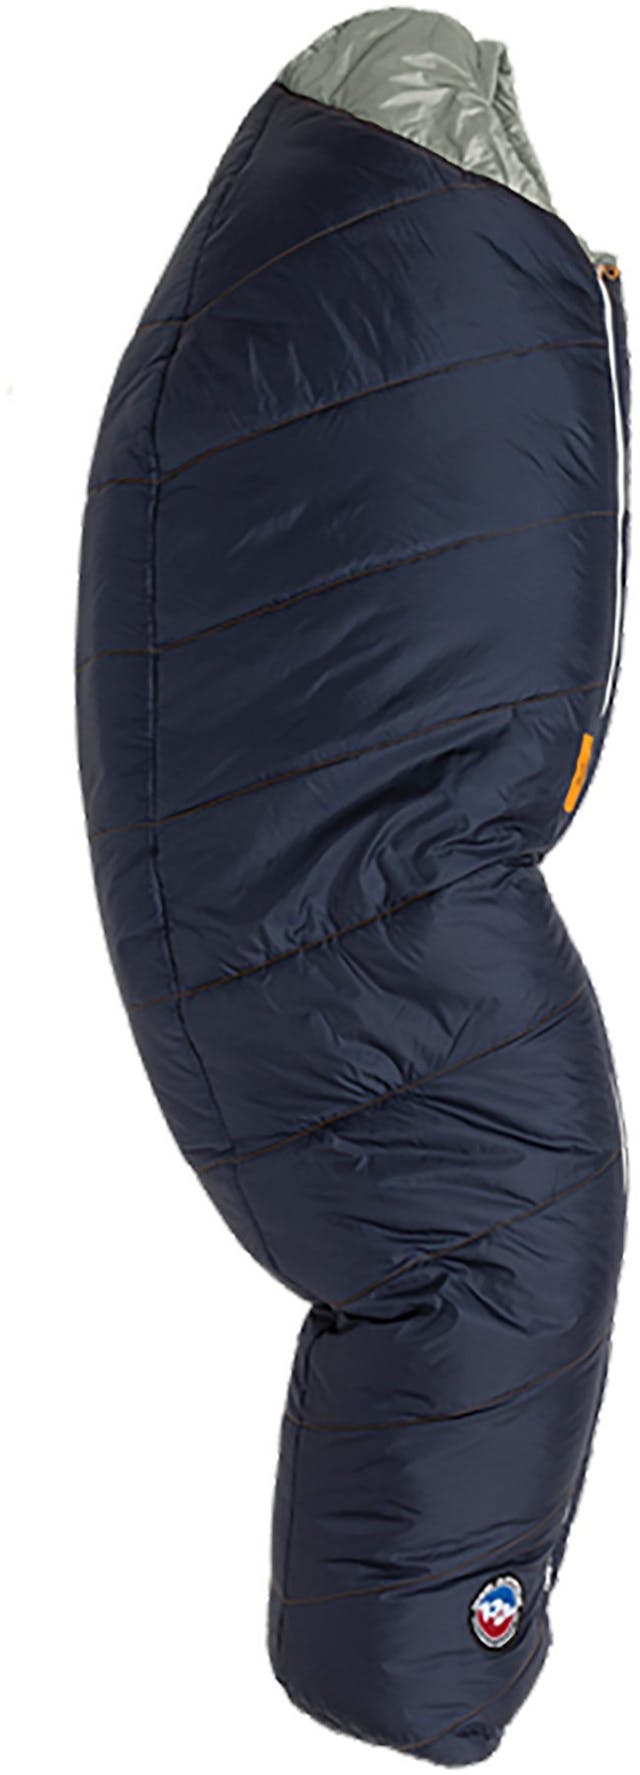 Product image for Sidewinder Camp 20°F/-7°C Mummy Sleeping Bag